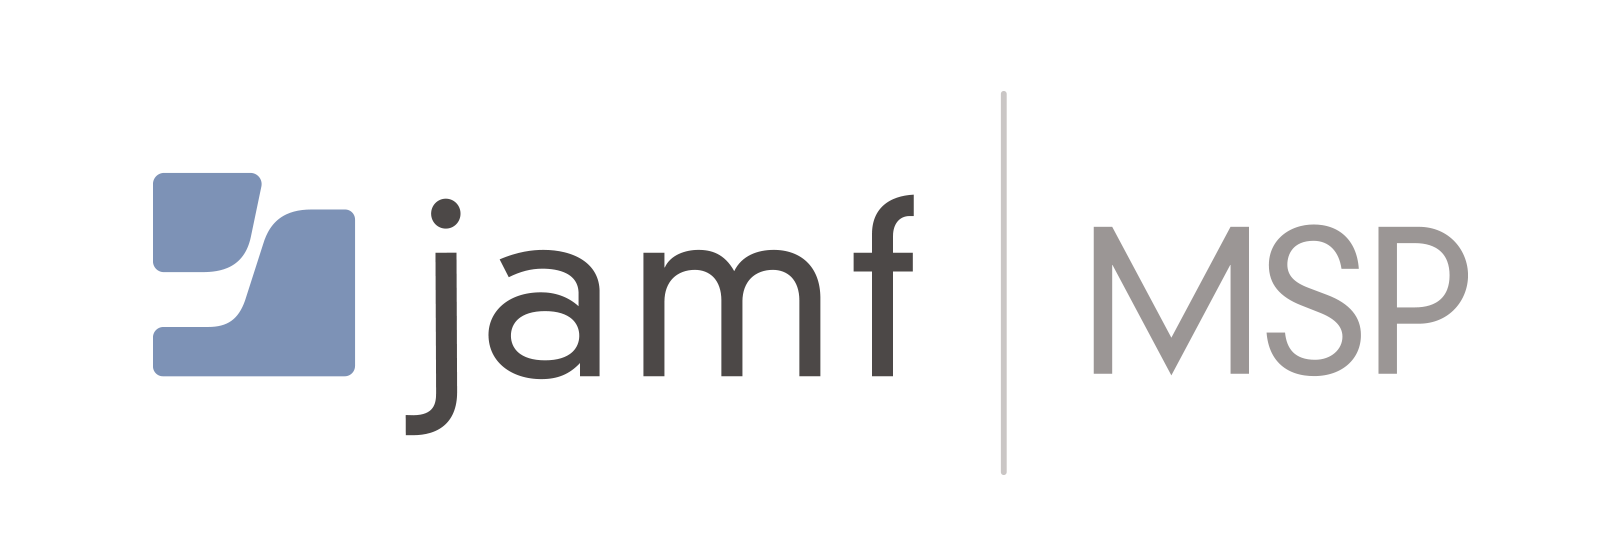 Jamf MSP logo